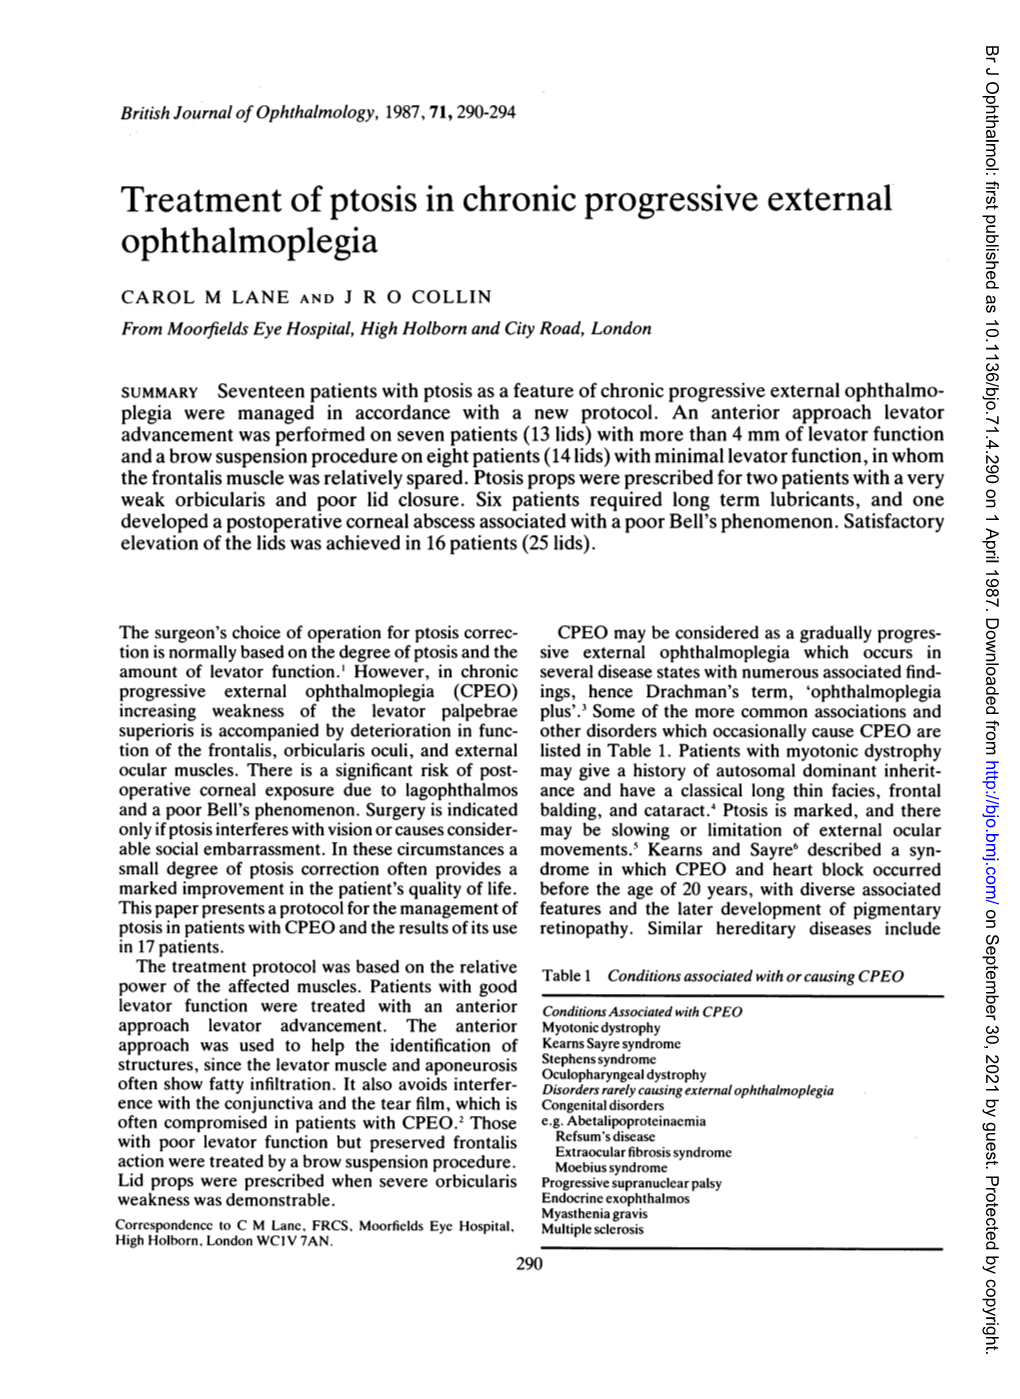 Treatment of Ptosis in Chronic Progressive External Ophthalmoplegia